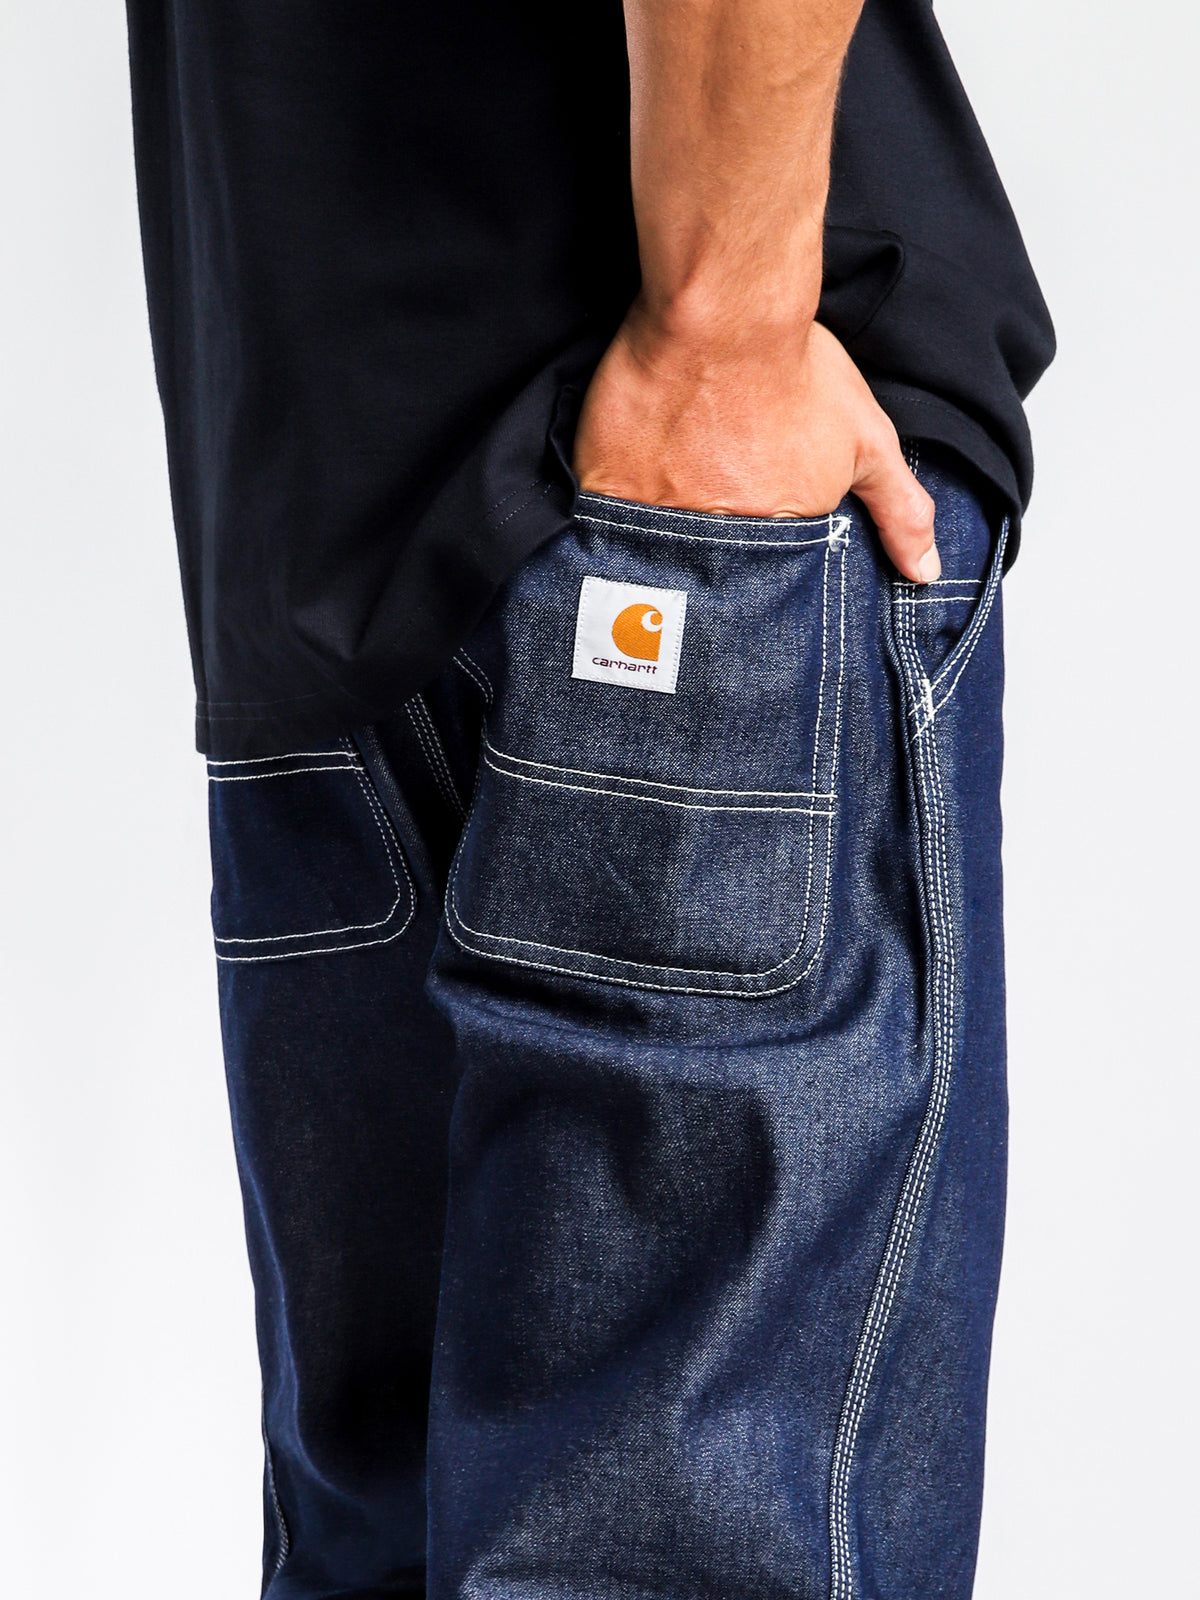 Simple Pants in Norco Blue Denim